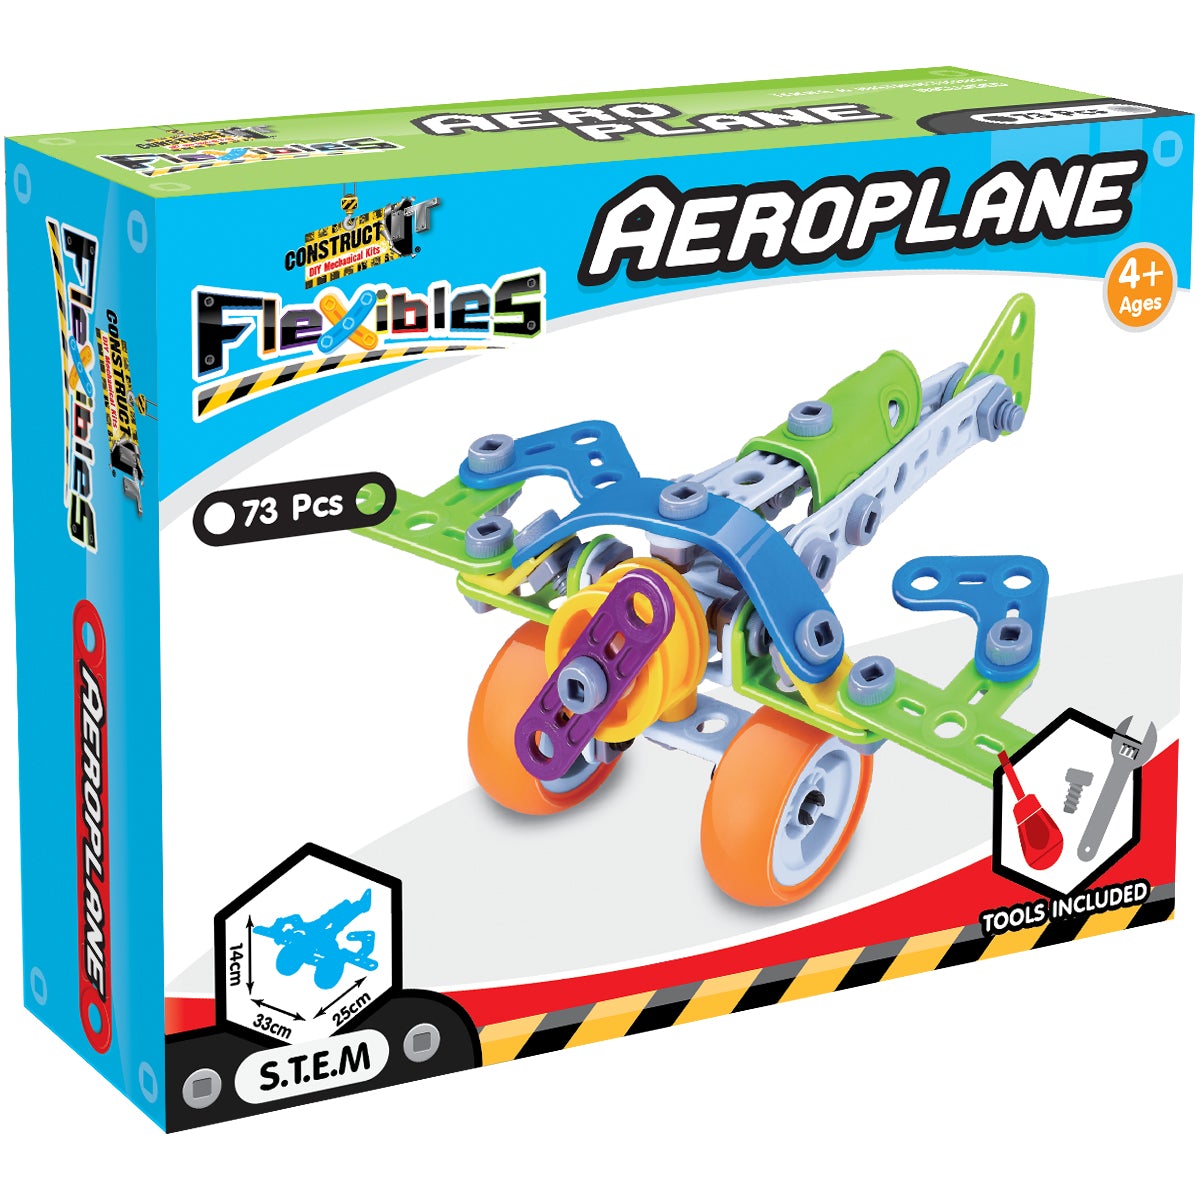 Flexibles - Plane The Toy Wagon